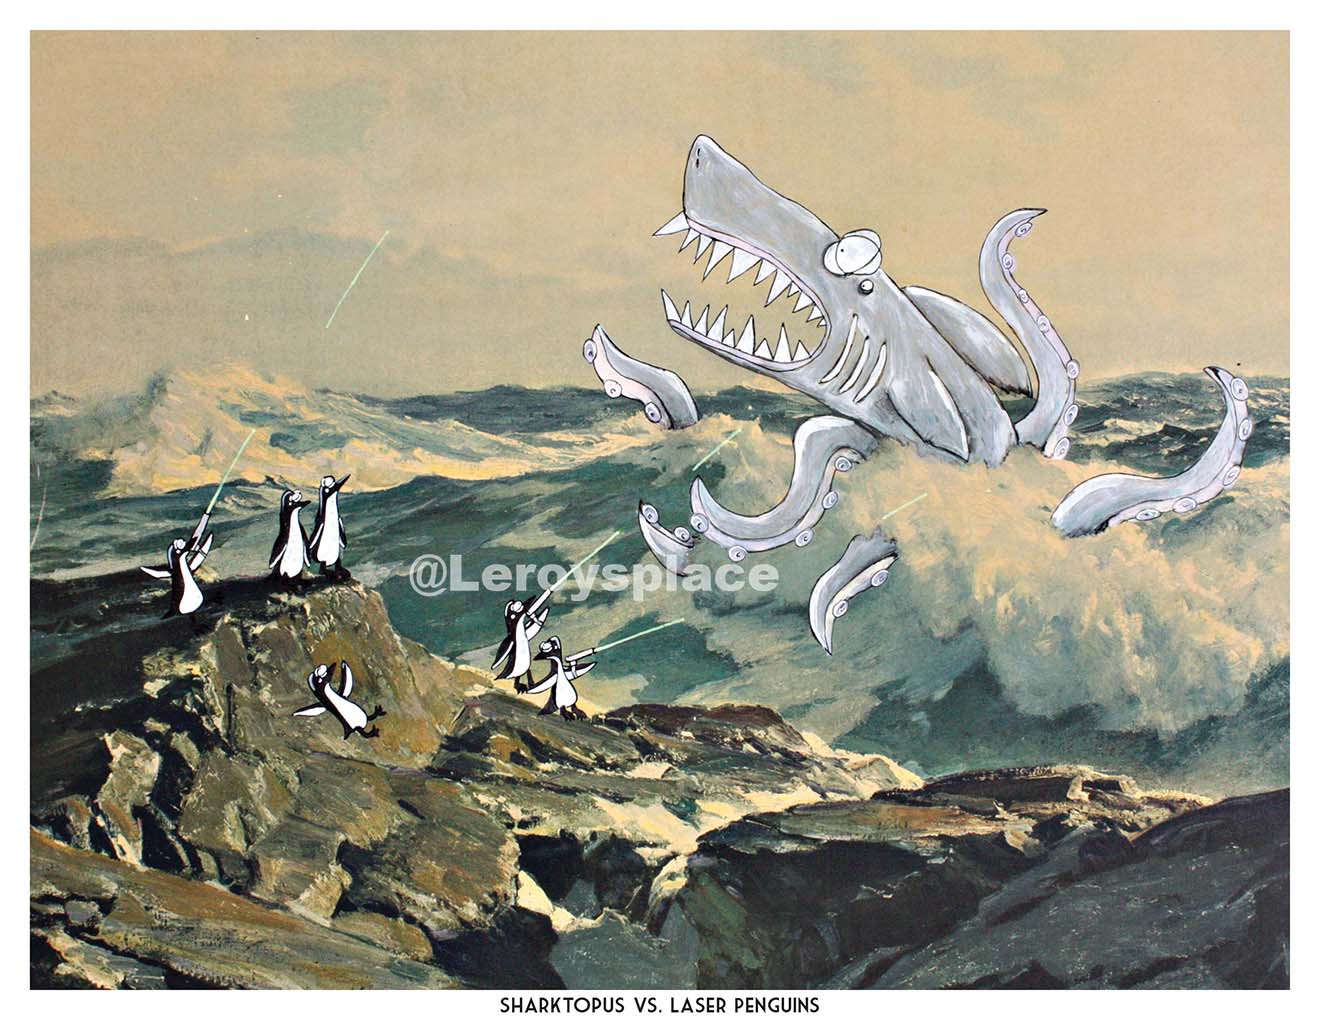 Sharktopus vs. Laser Penguins - 8.5 x 11 Art Print | Leroy's Place